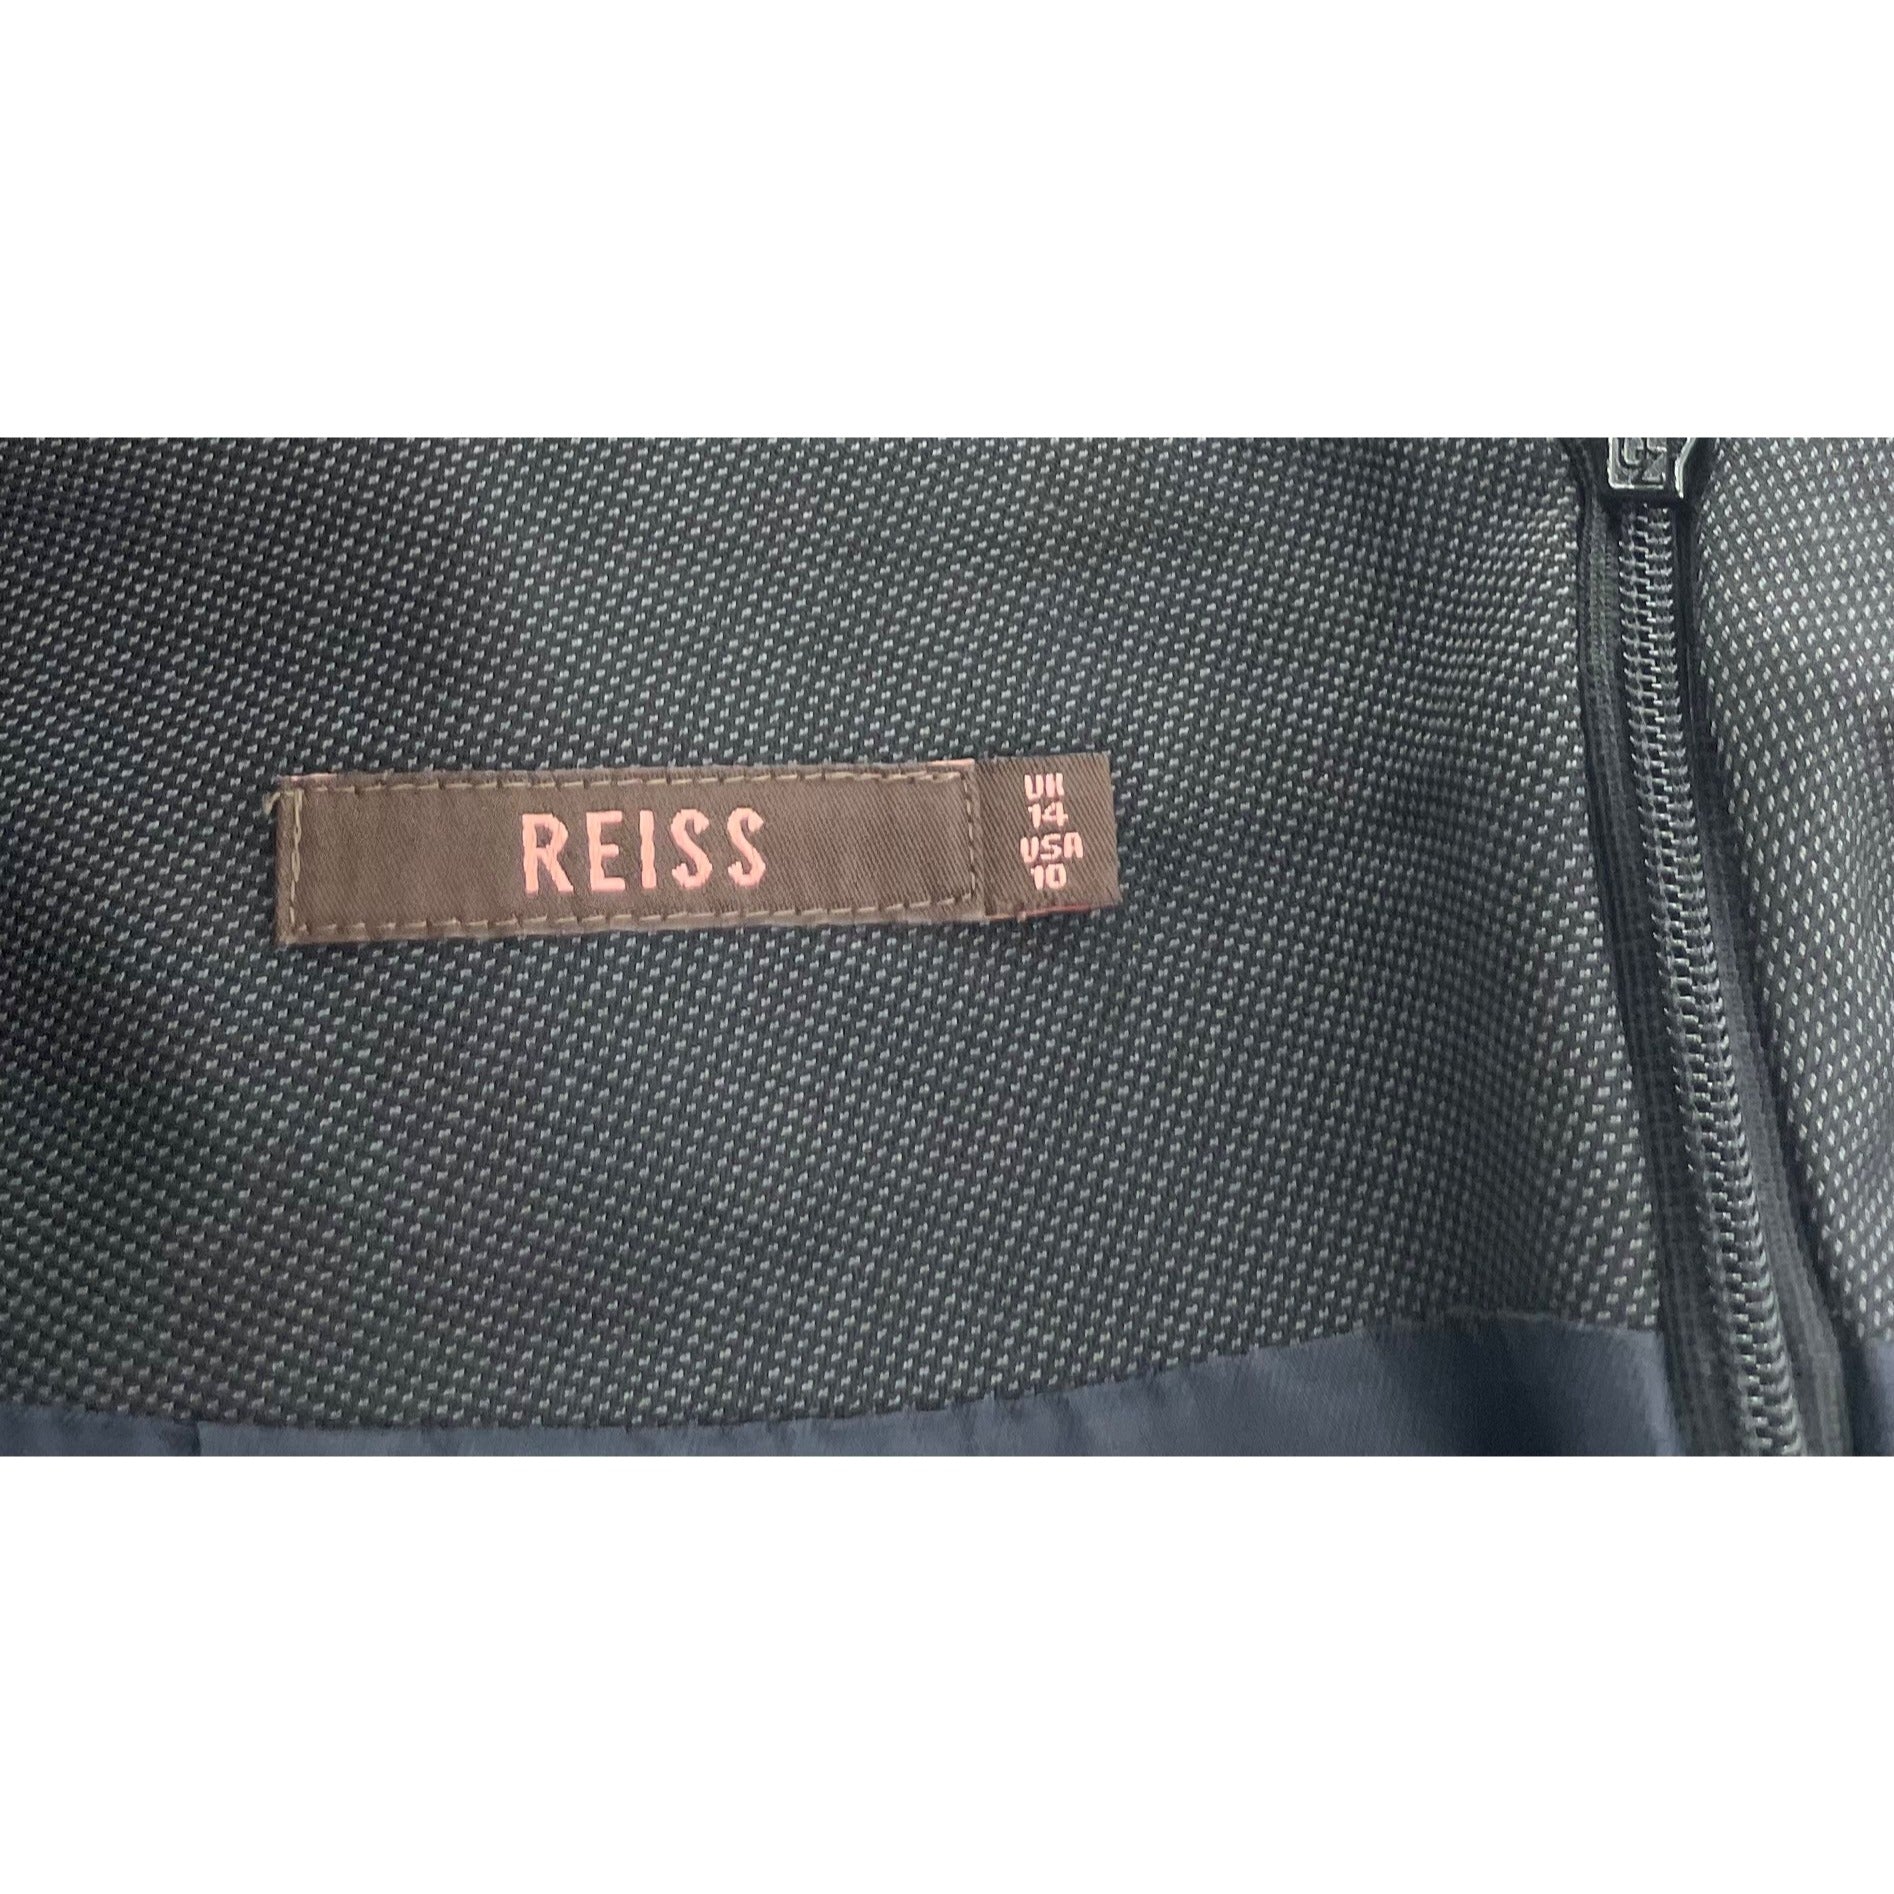 REISS Women's Size 10 Grey Pencil Office Pencil Skirt